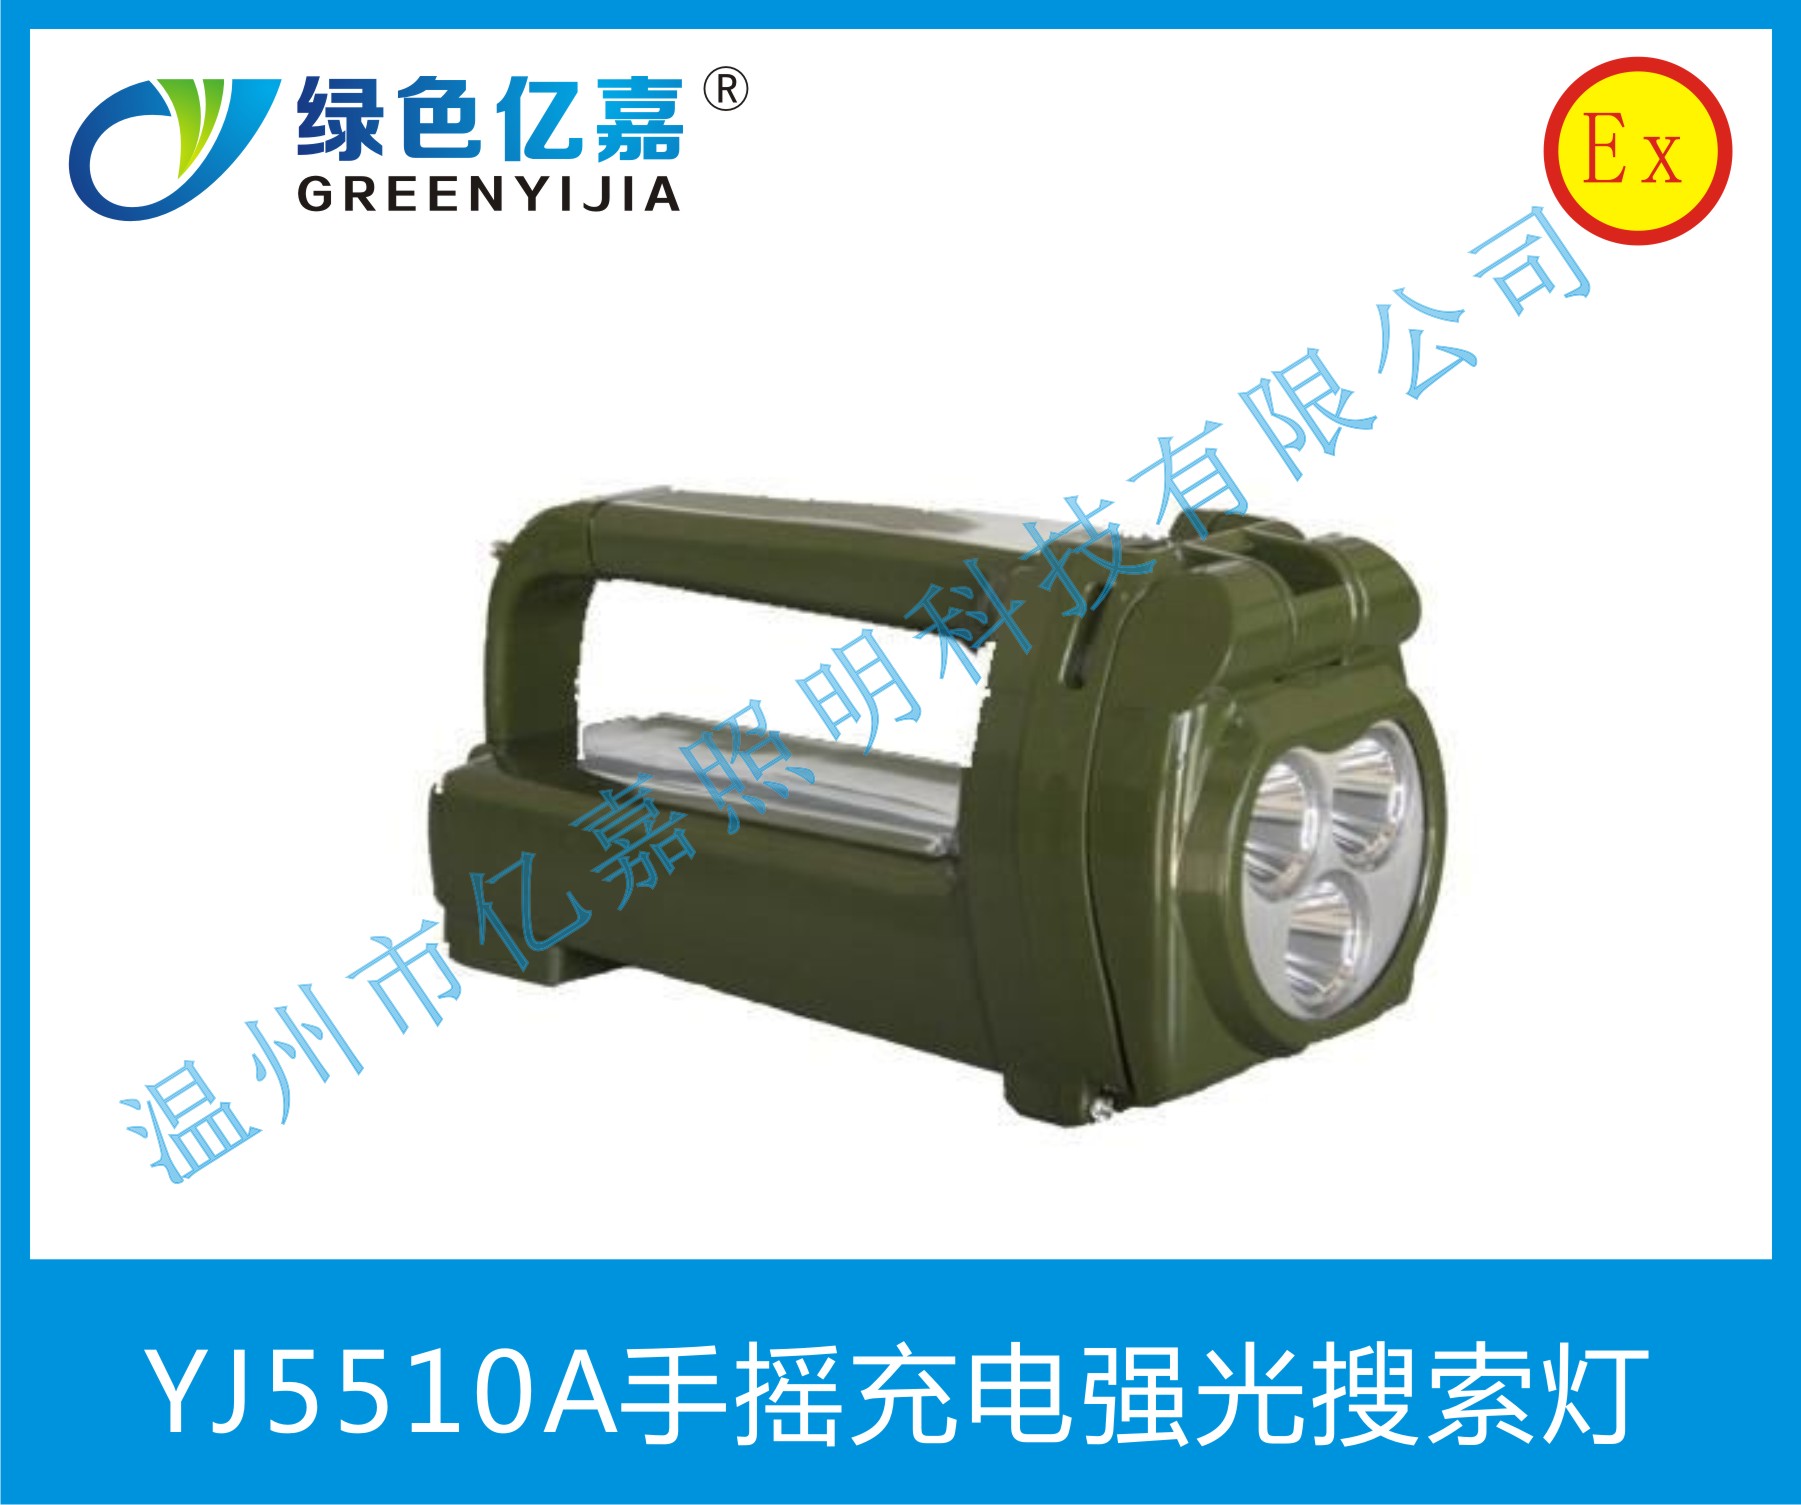 YJ5510A手摇充电强光搜索灯